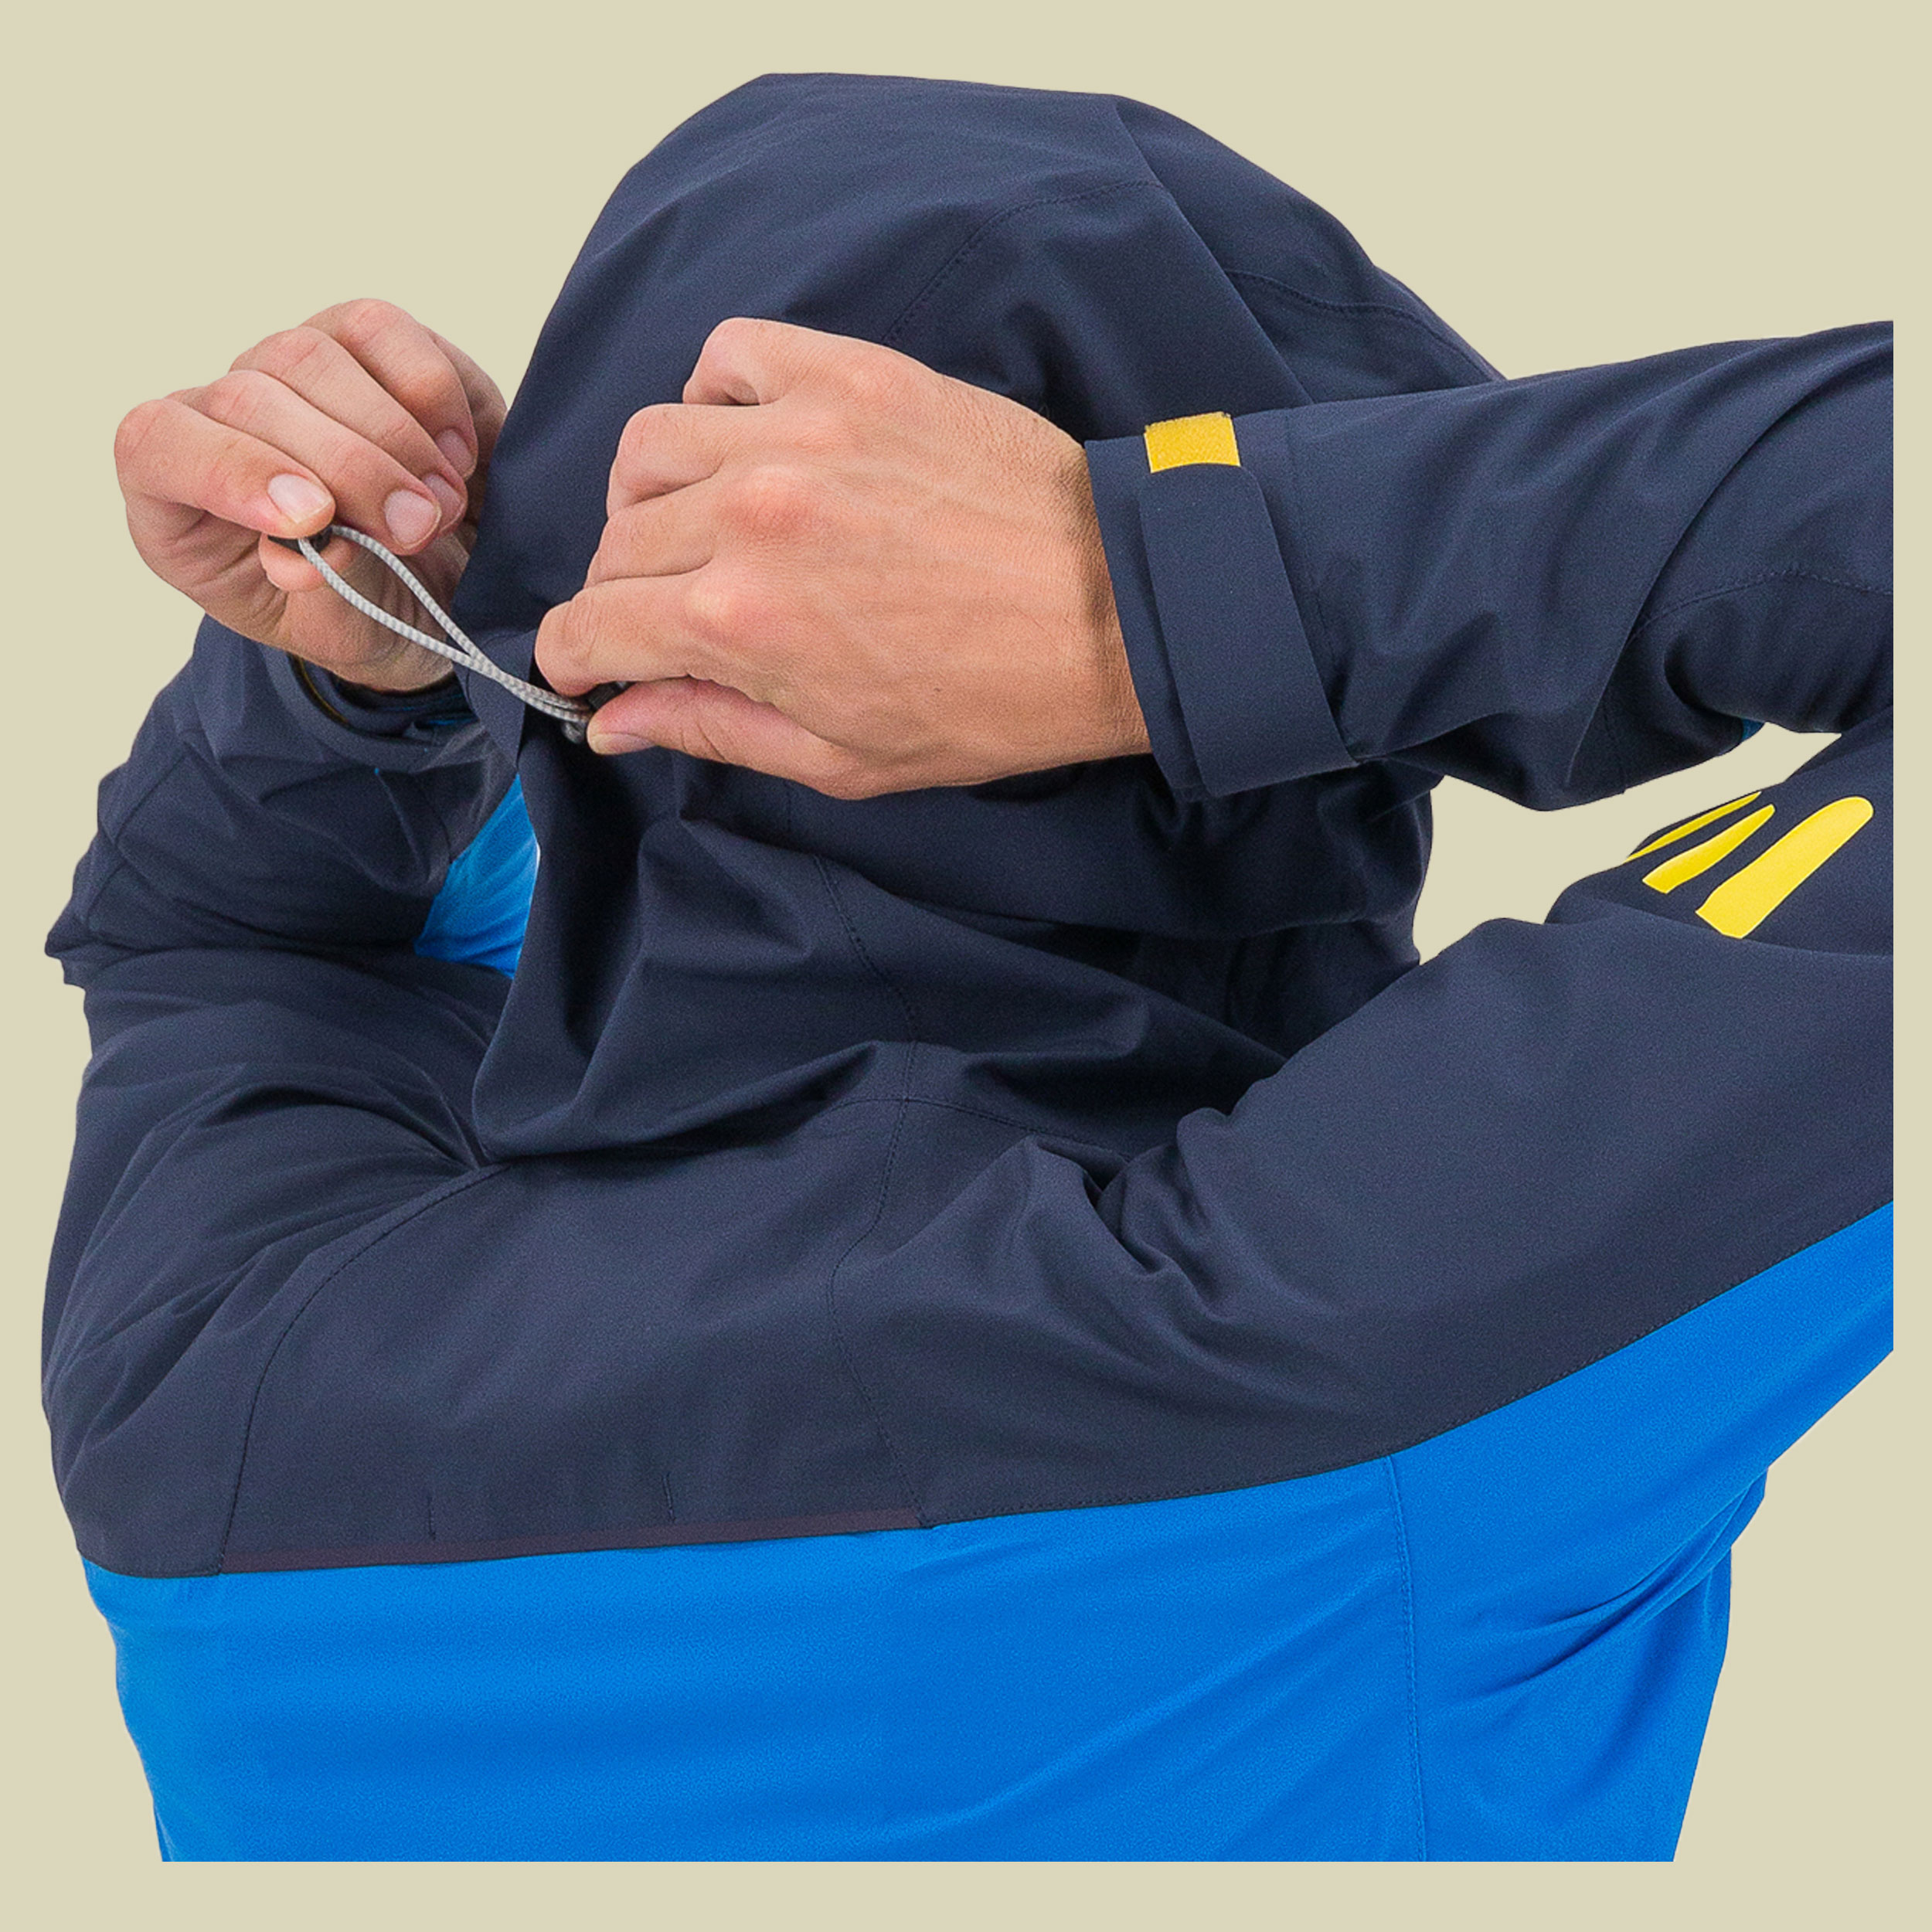 Temporale Jacket Men Größe S Farbe indigo bunting/outer space